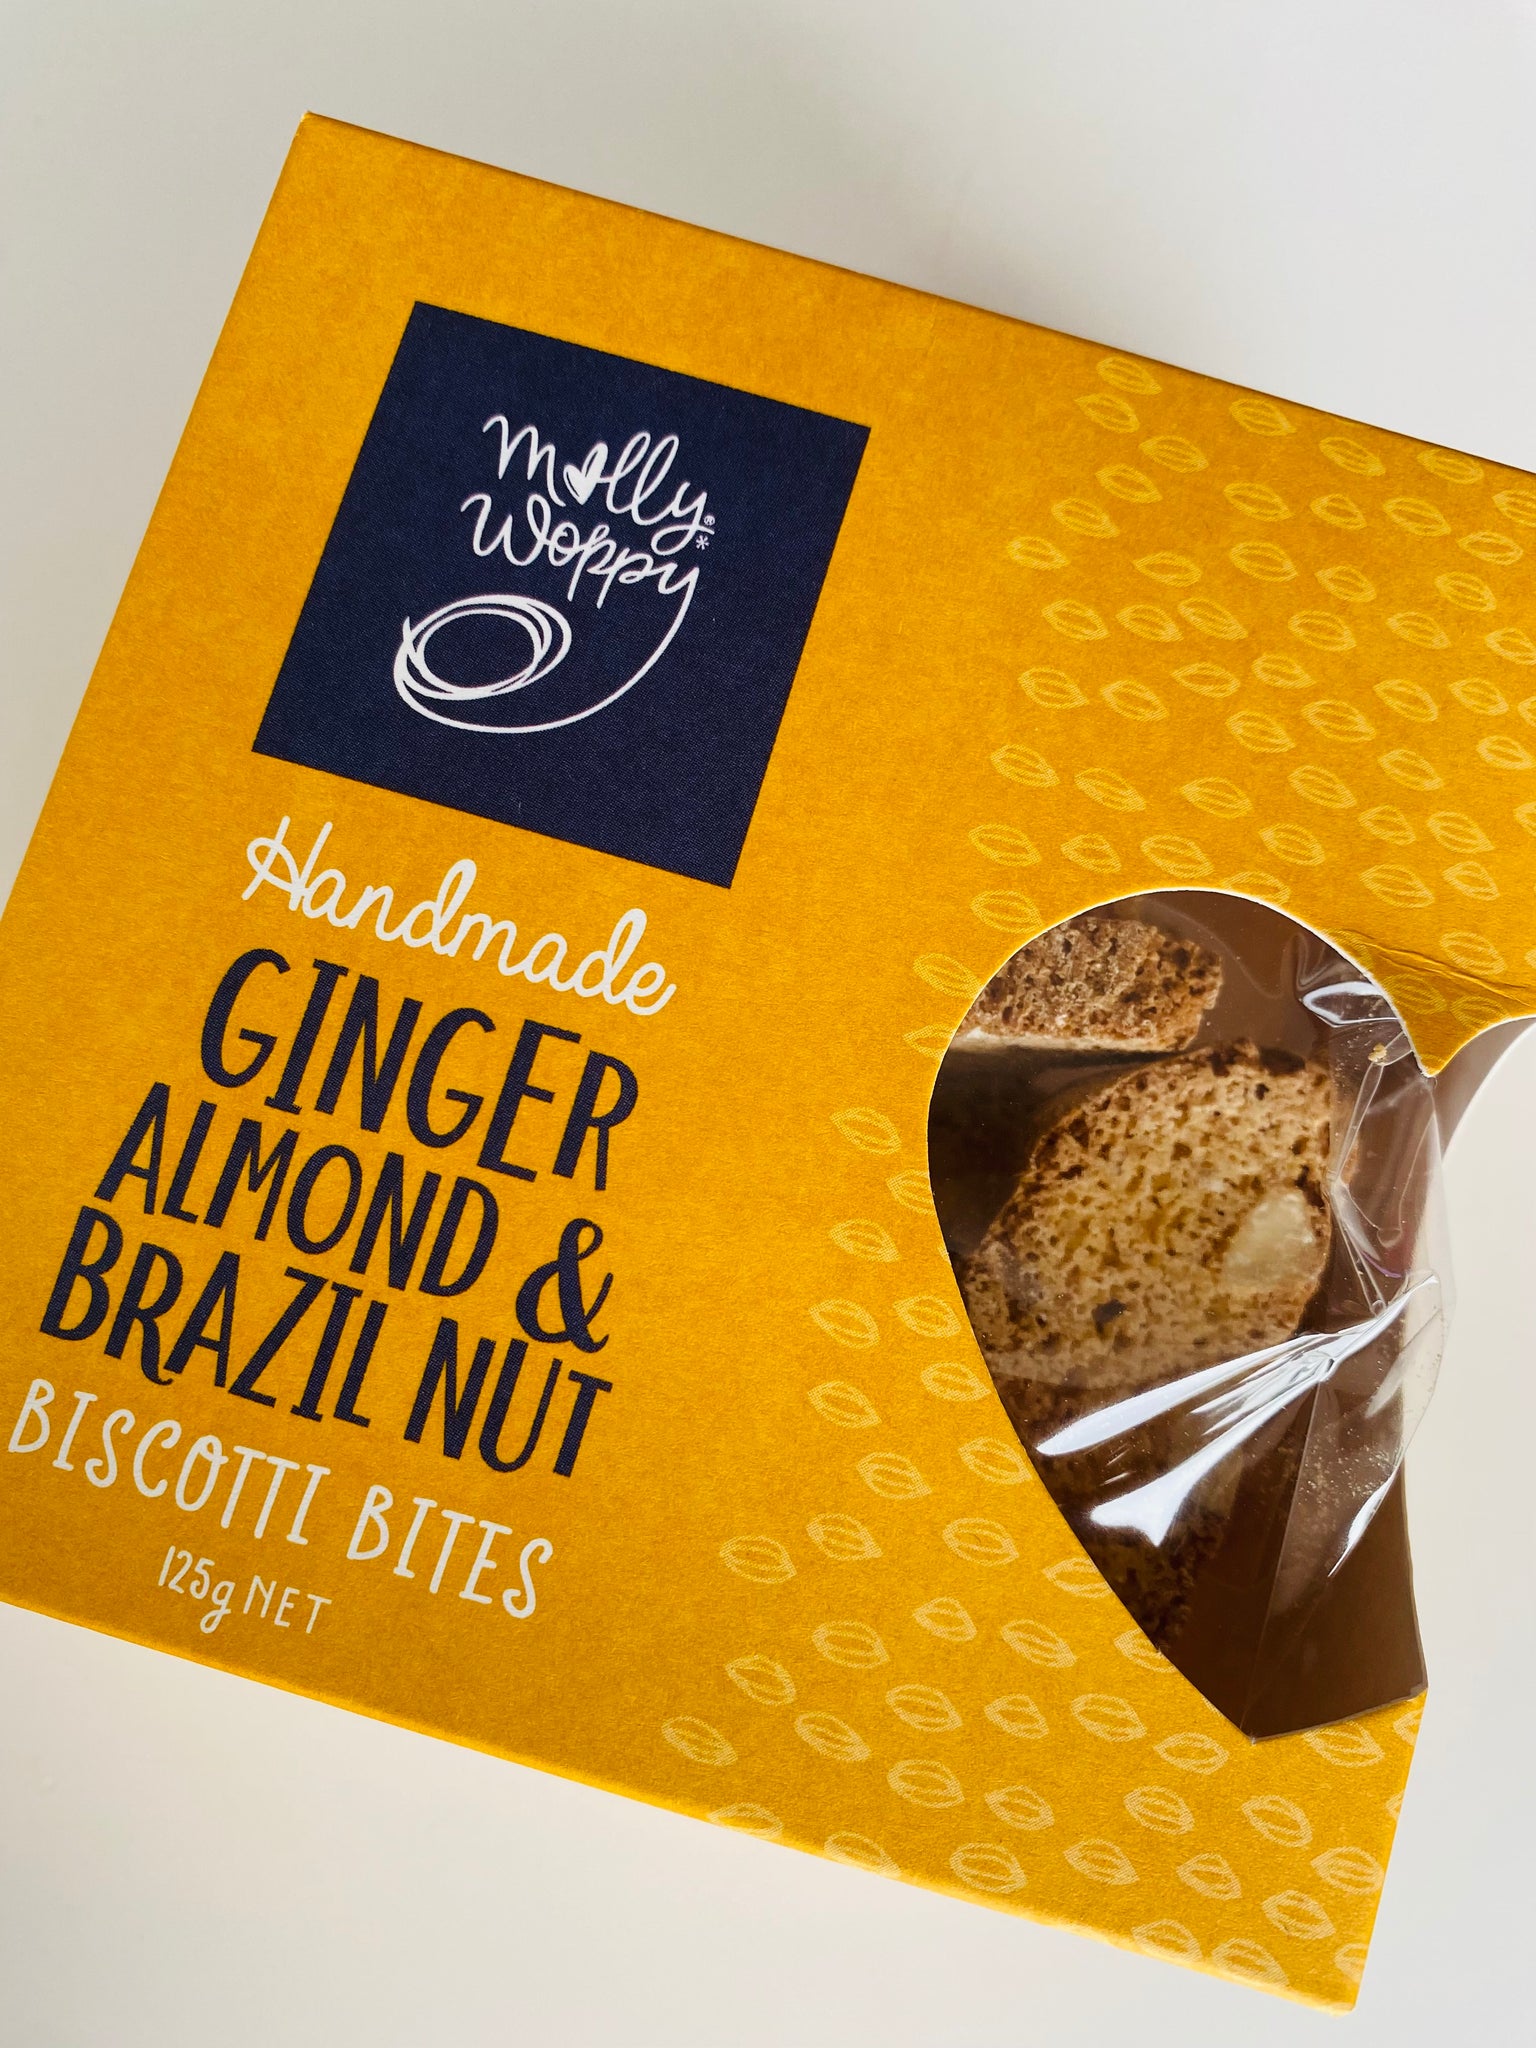 Ginger Almond & Brazil Nut Biscotti Bites